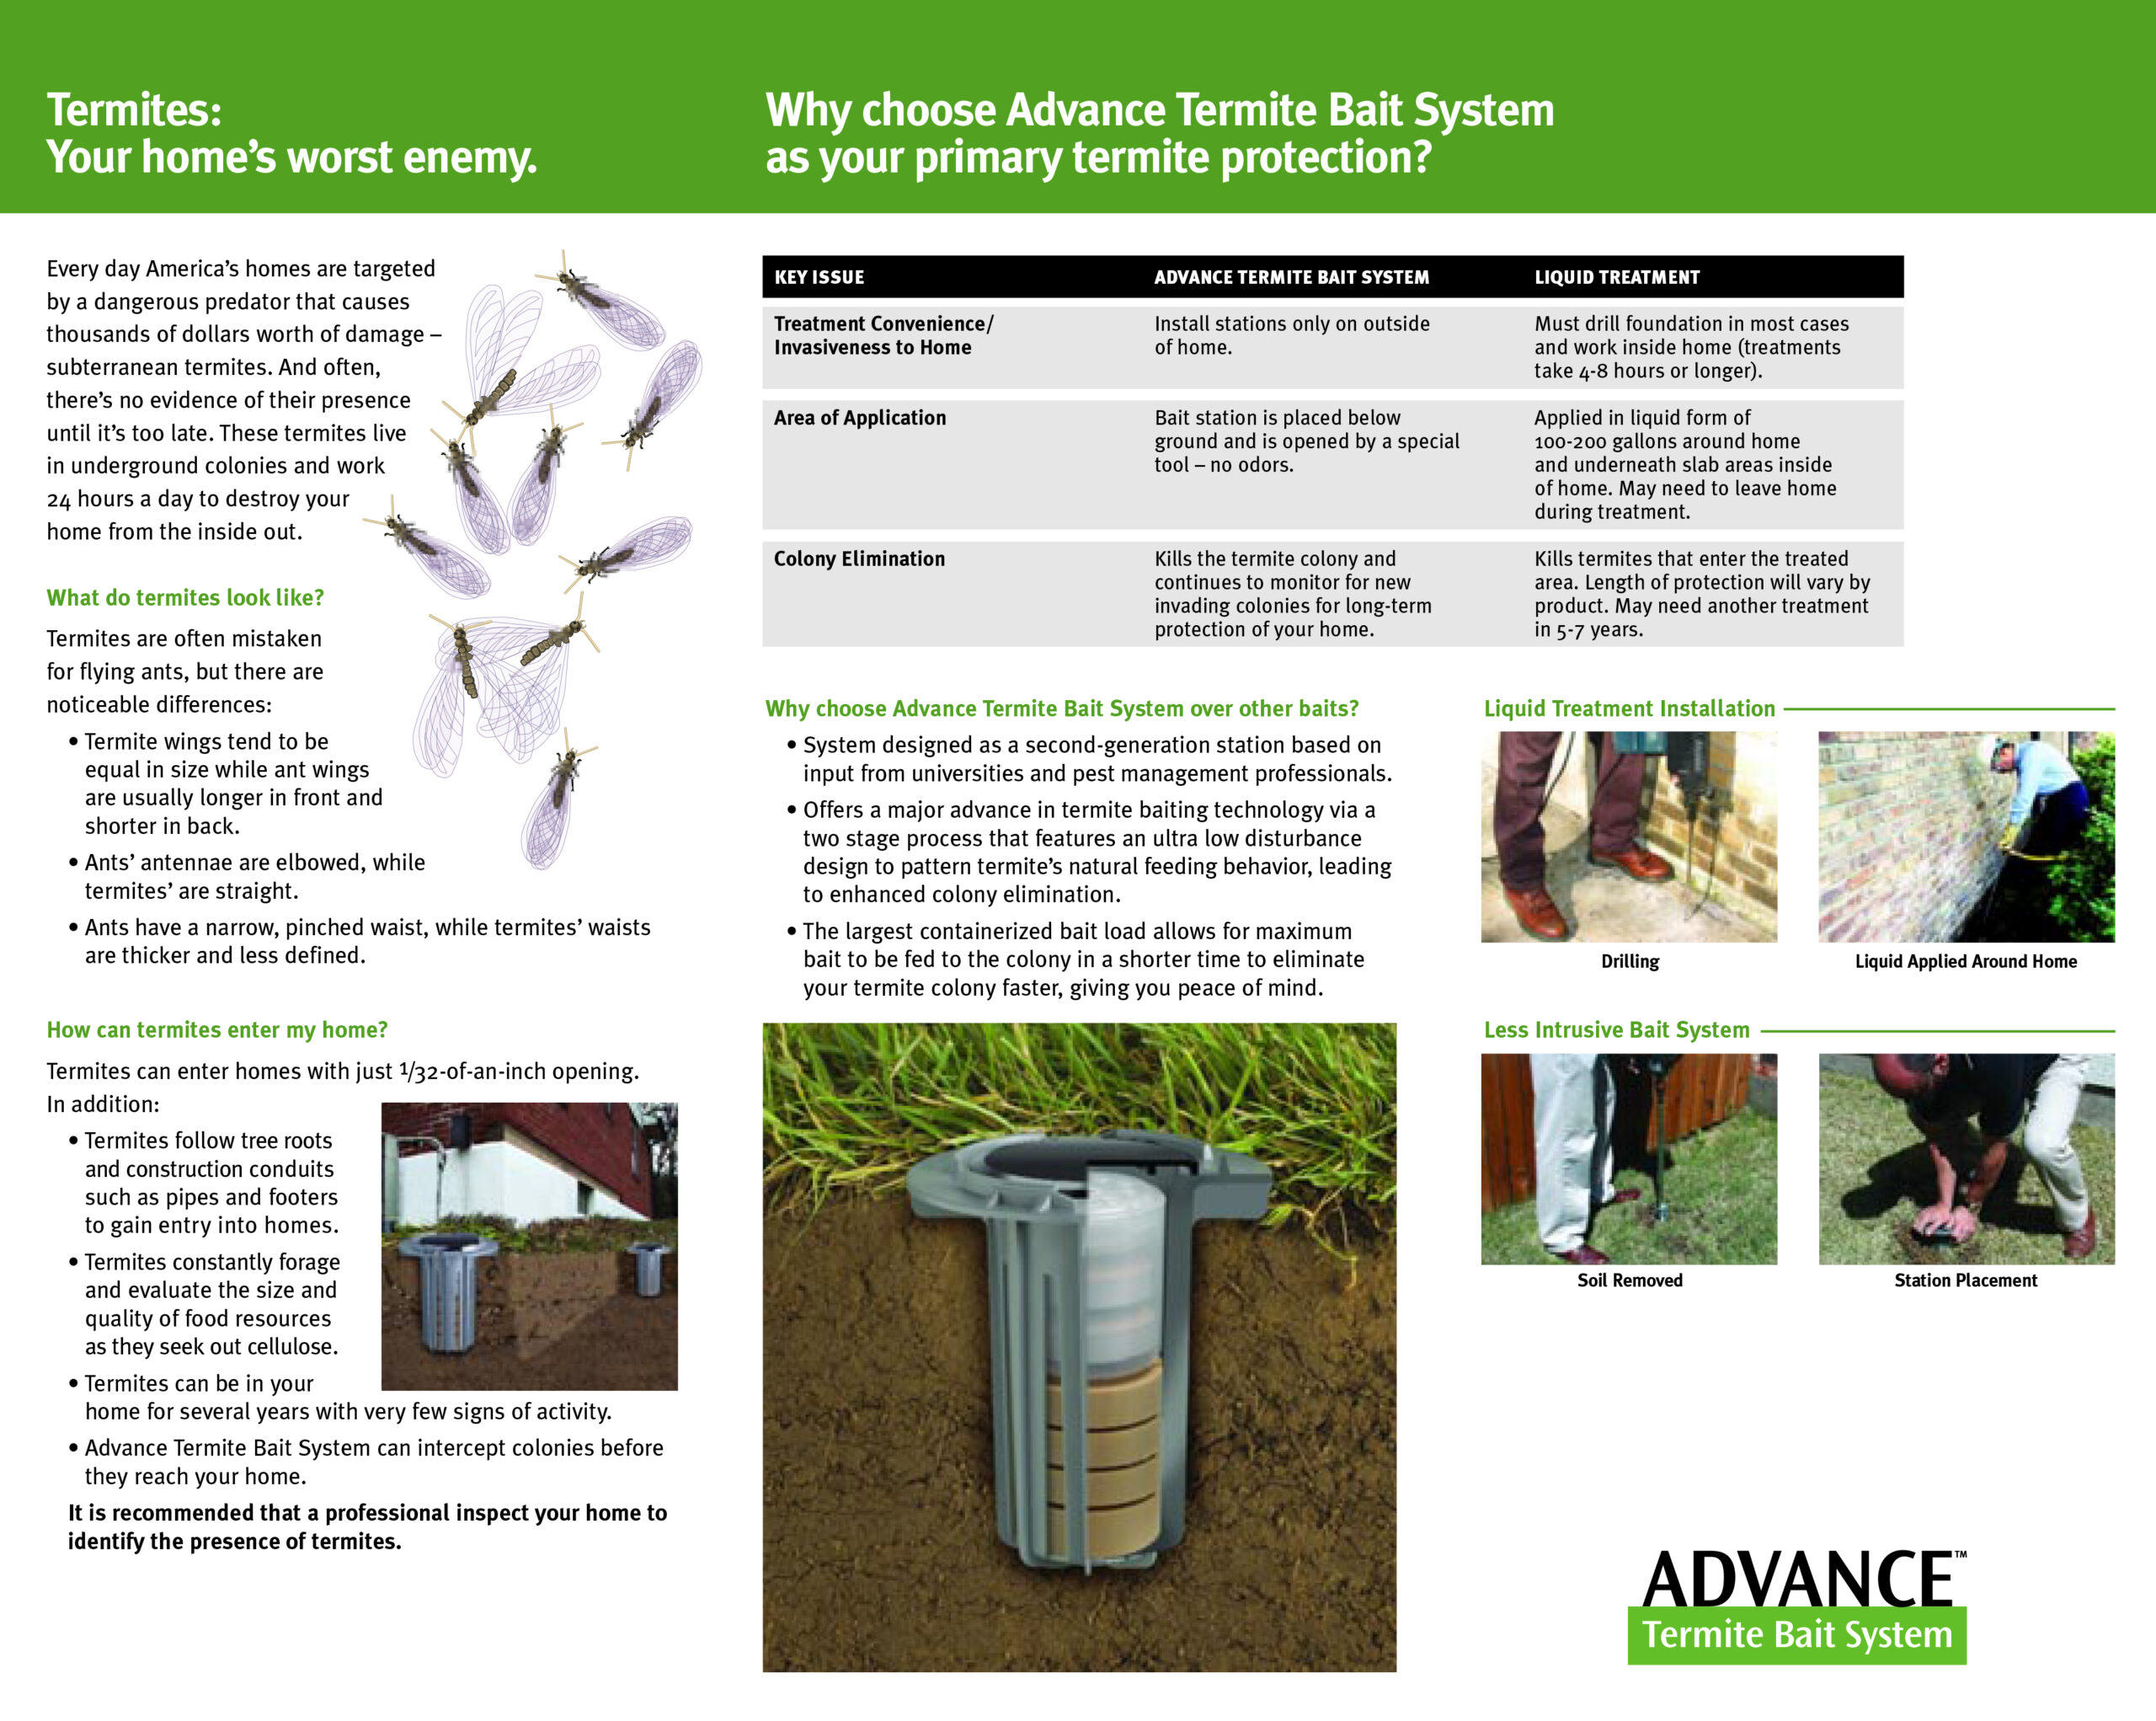 Advanced Termite Bait System